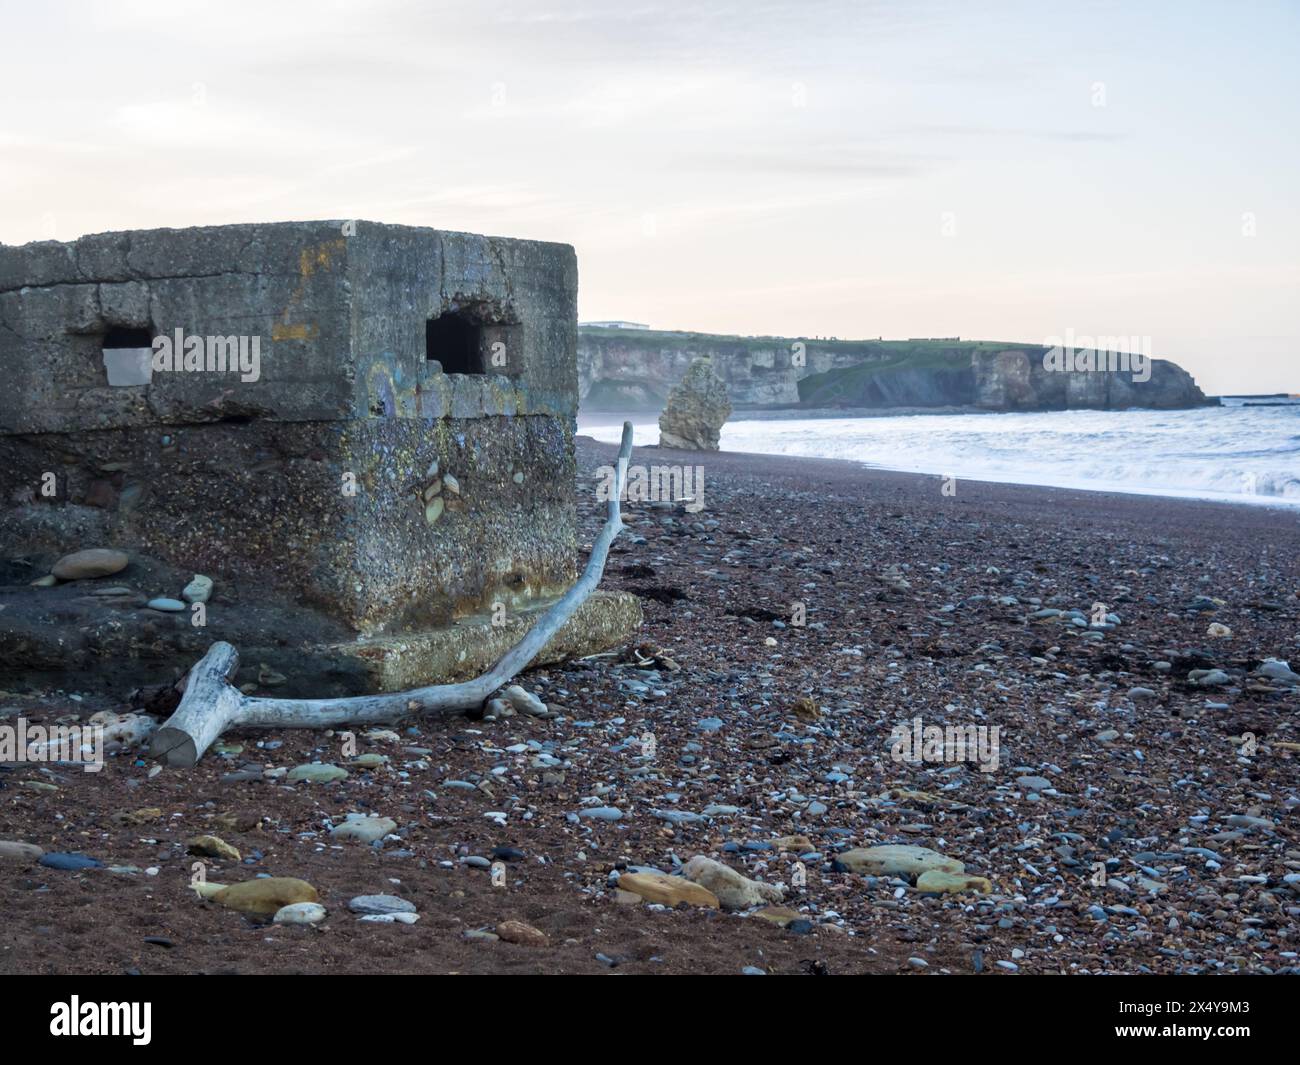 Abandoned Pillbox and Driftwood at Blast Beach, Seaham, County Durham, UK Stock Photo